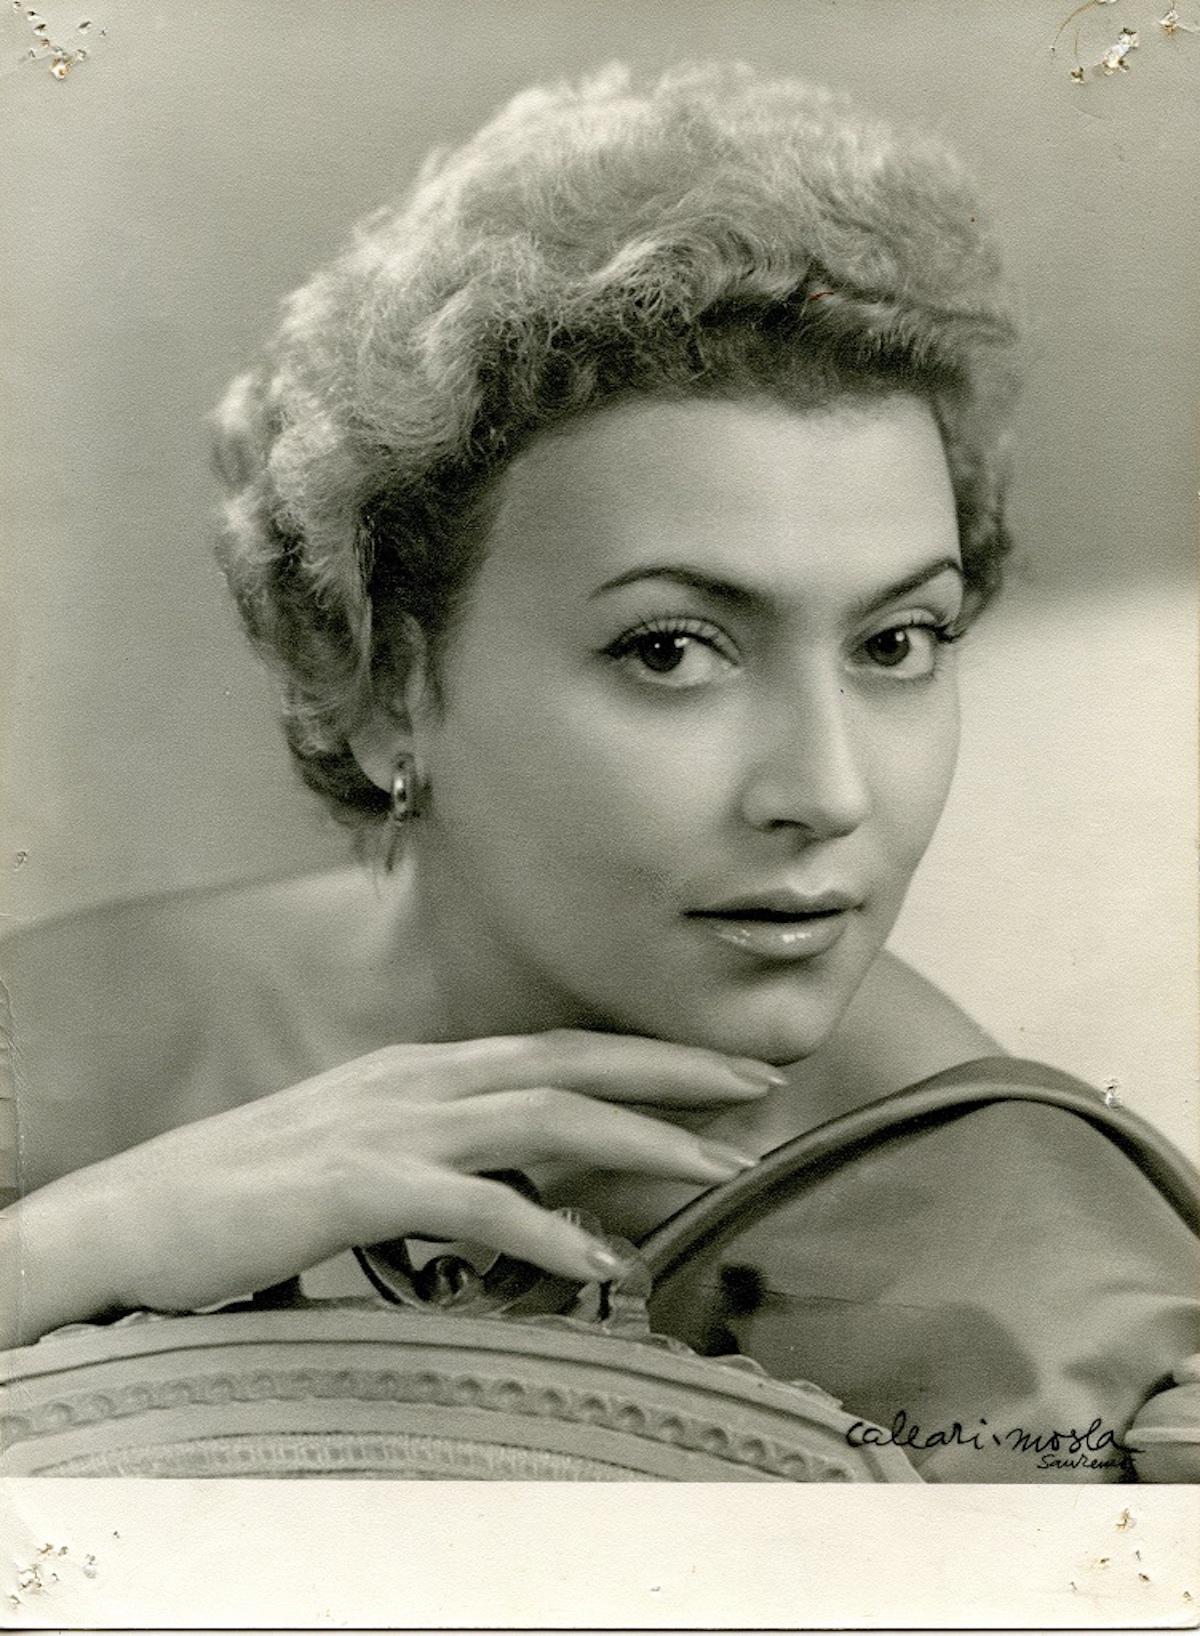 Studio Portrait of Nilla Pizzi - B/w Photo - 1950s